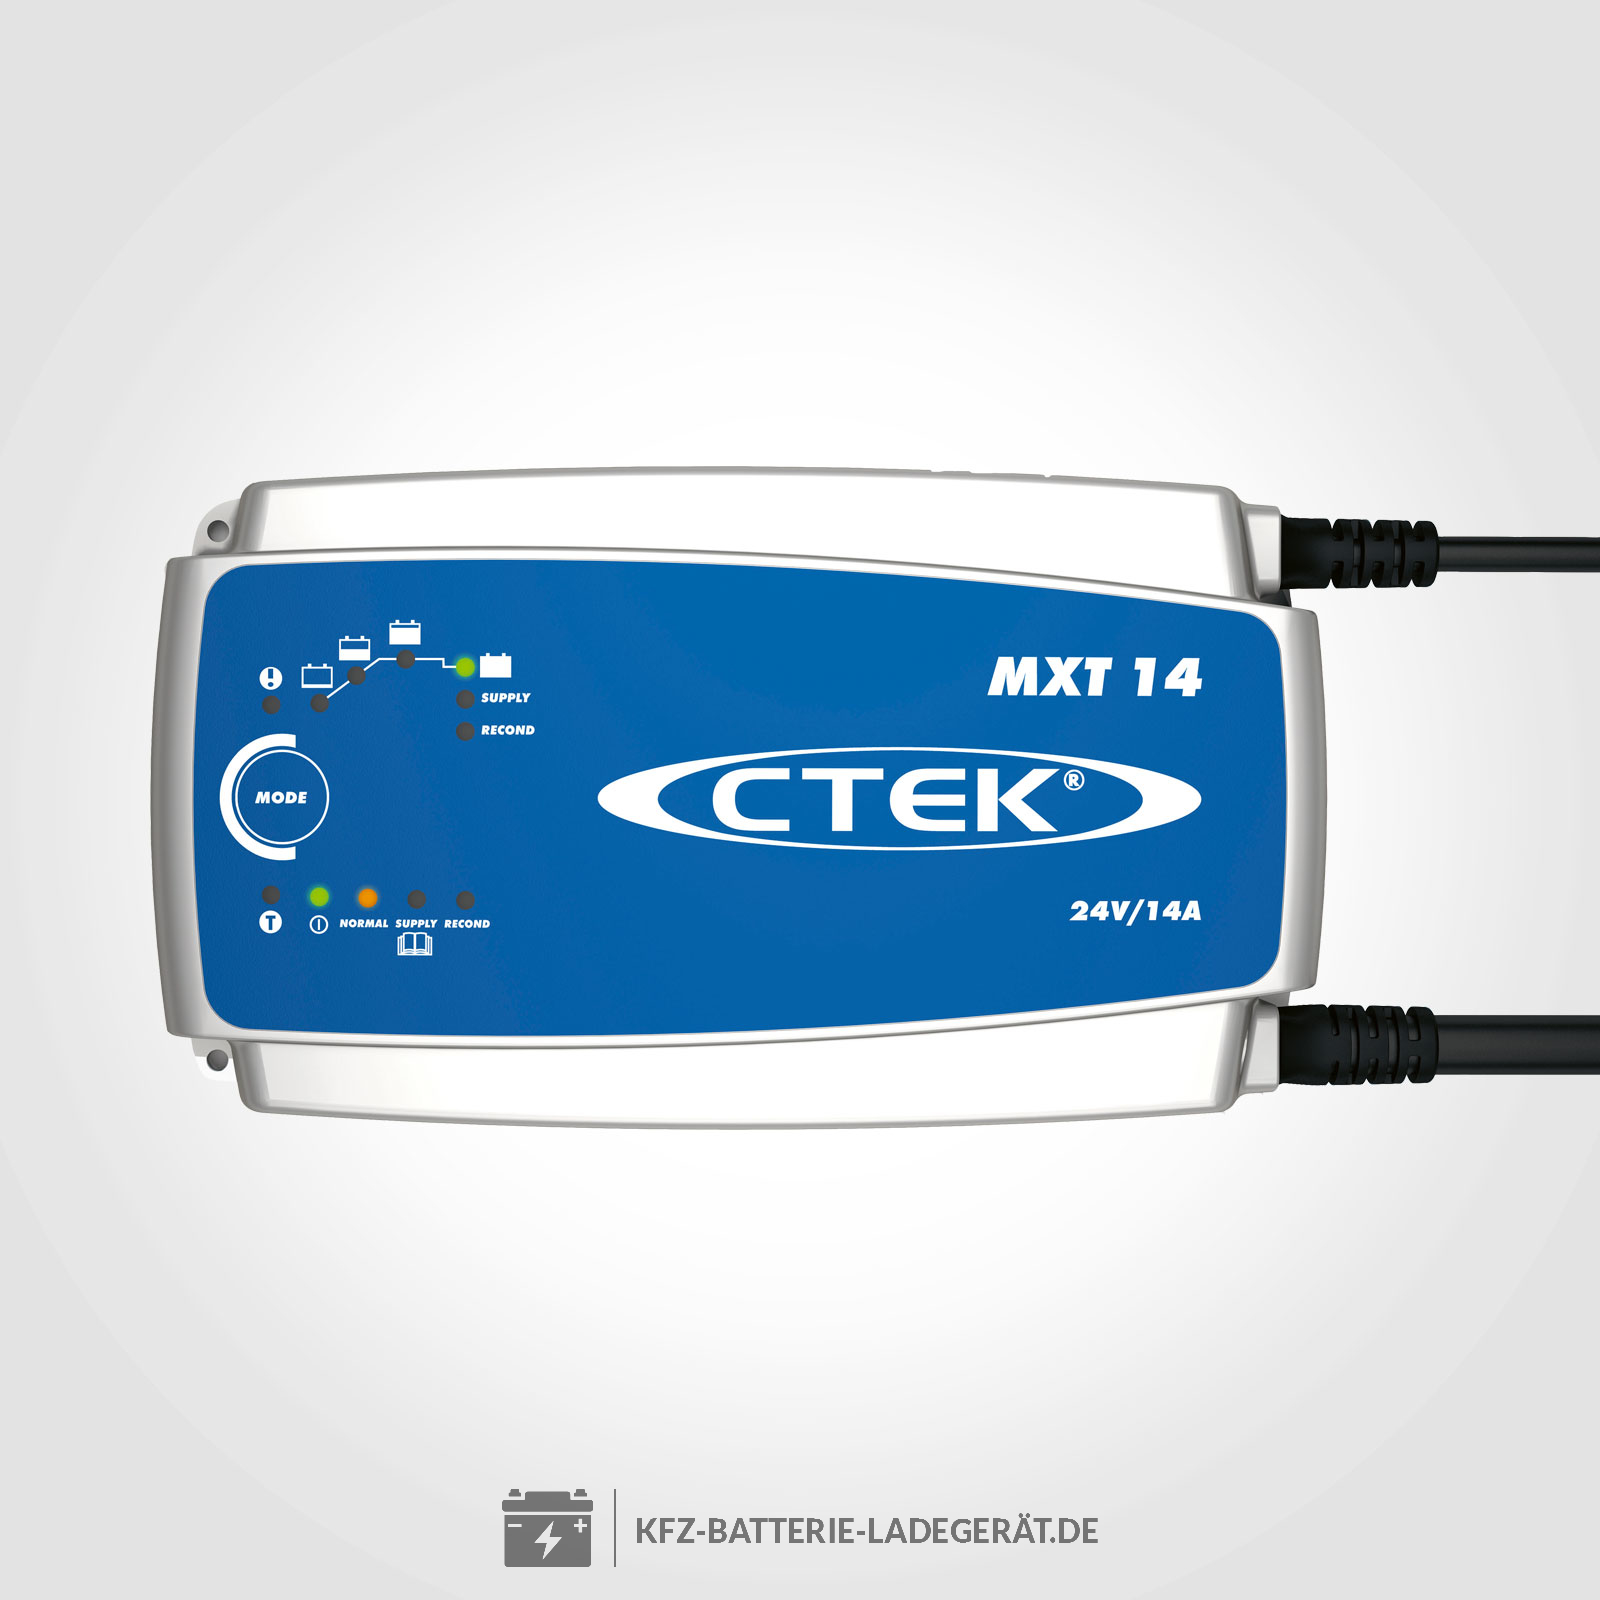 Rätikon Batterien AG - CTEK Ladegeräte